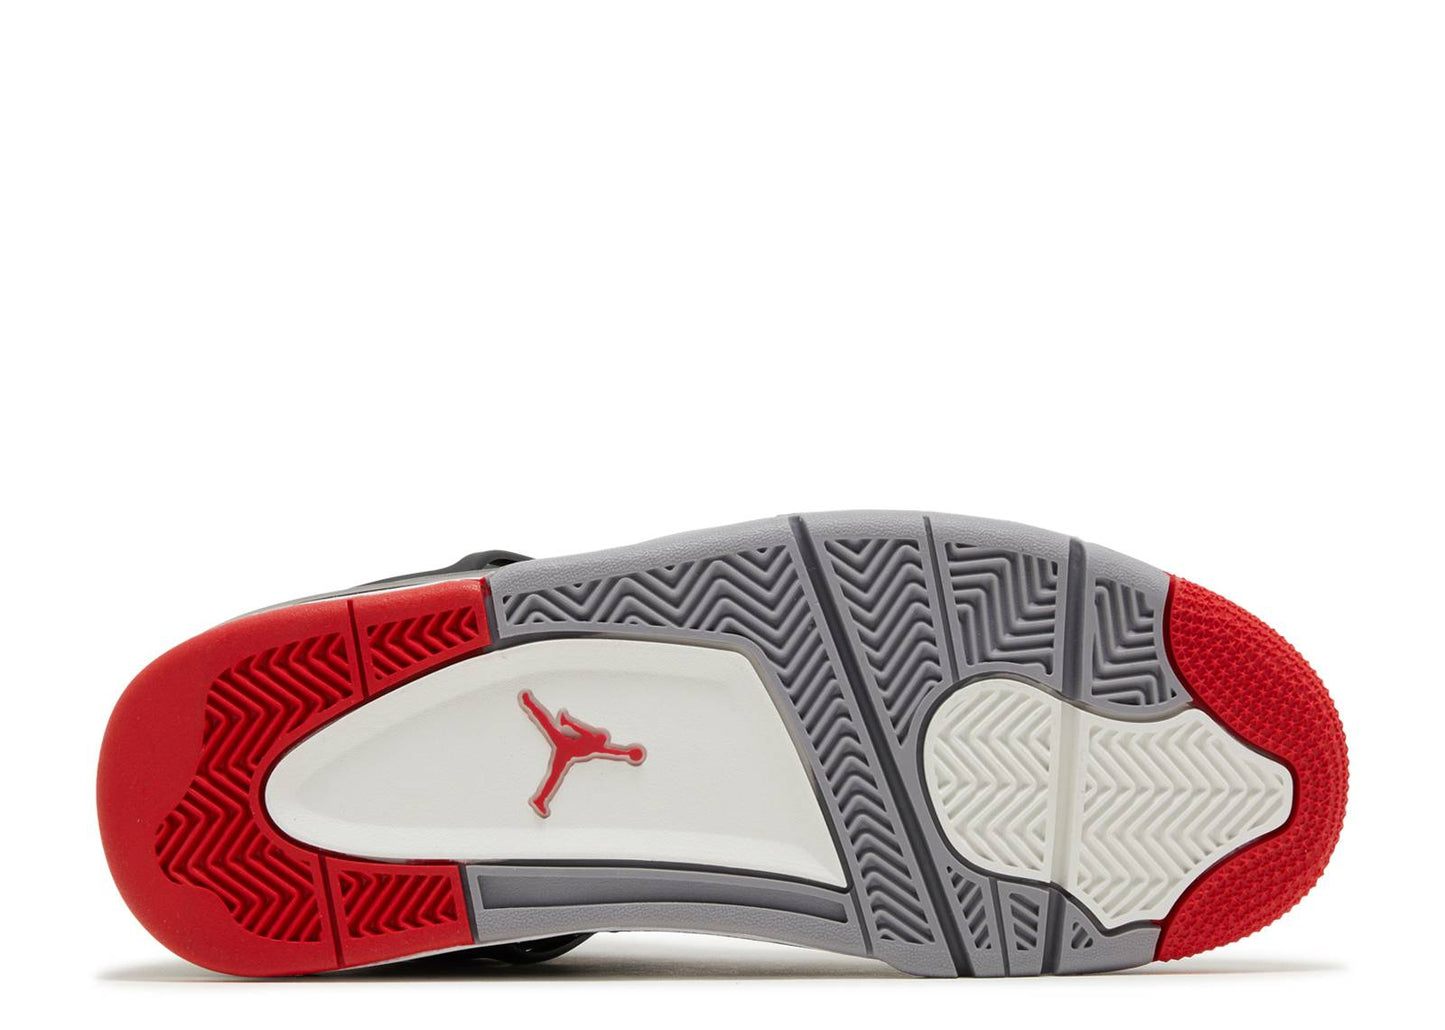 Air Jordan 4 Retro GS "Bred Reimagined"